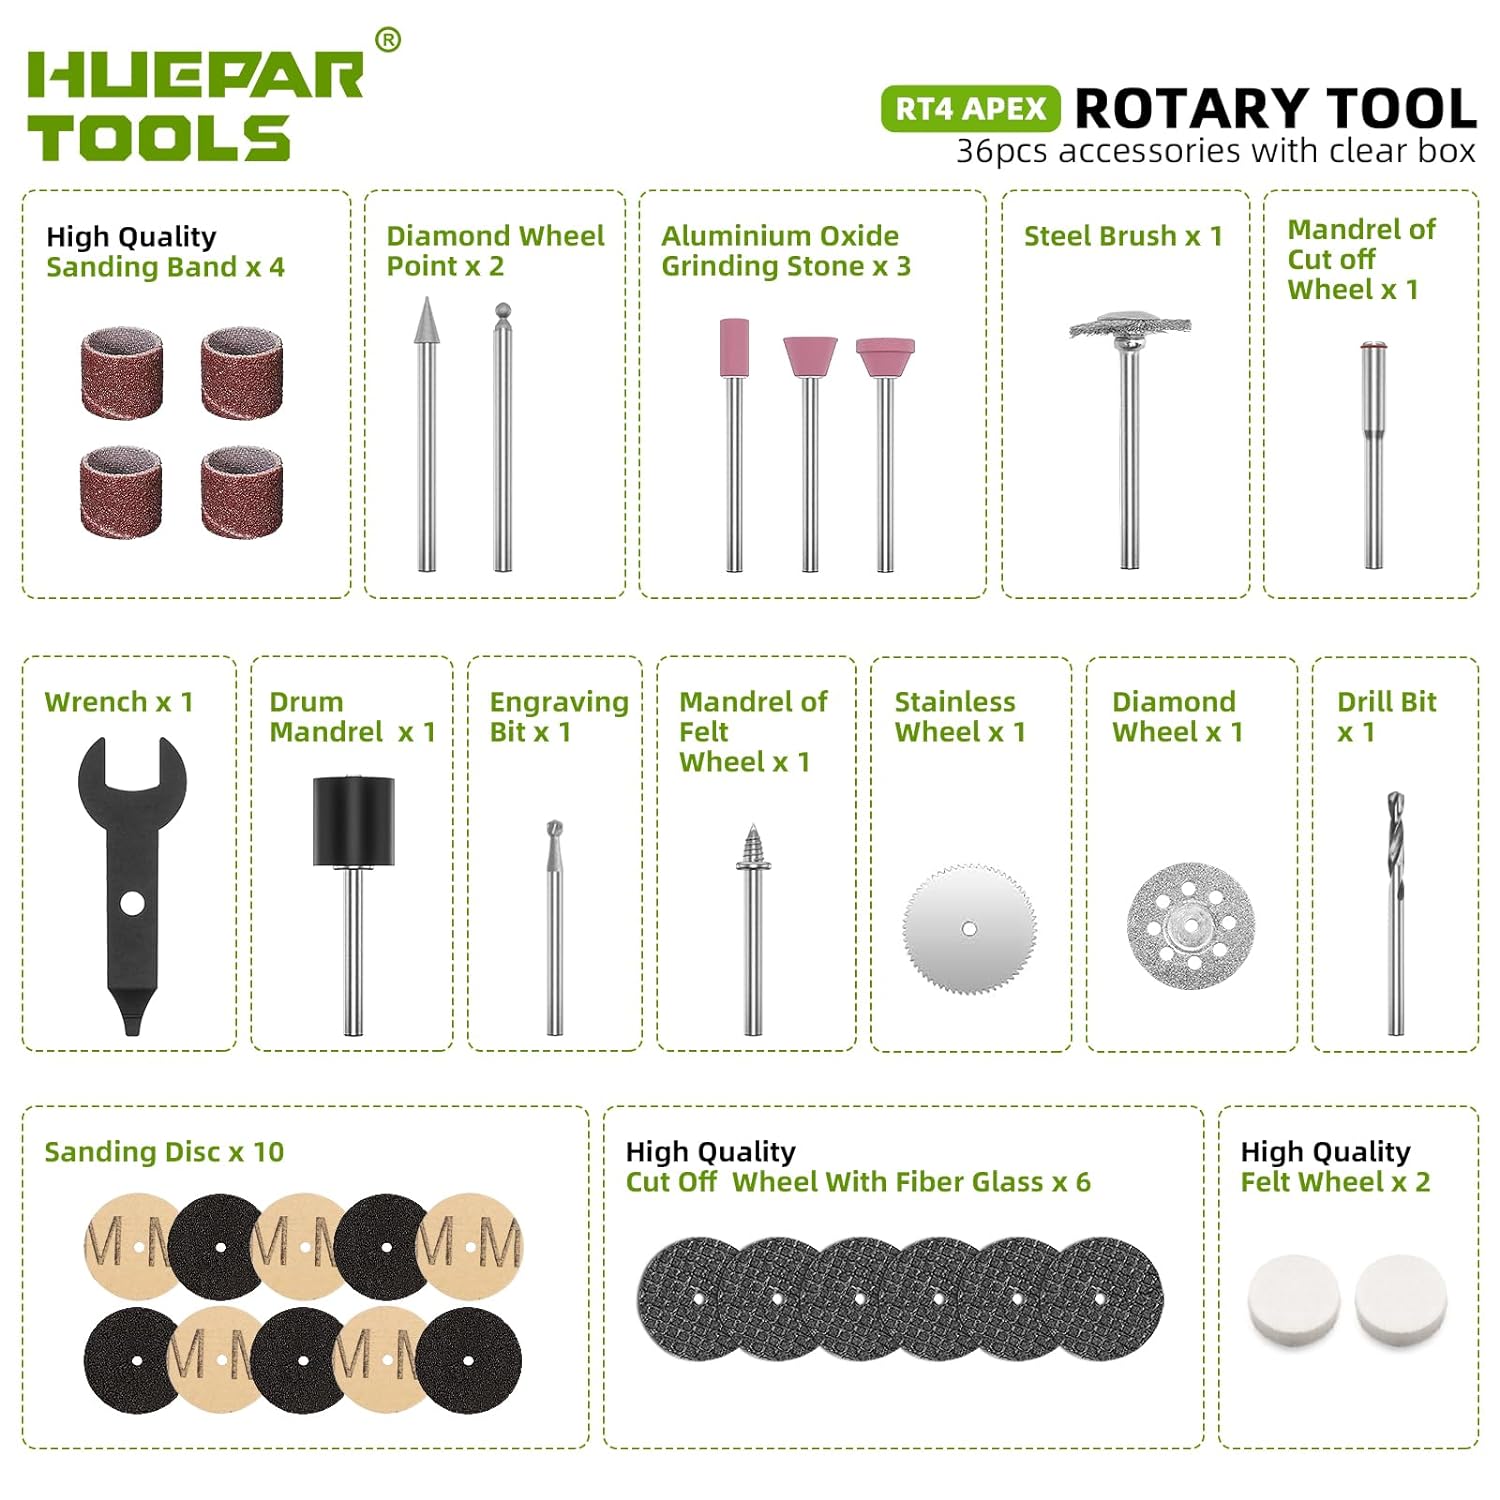 Huepar Tools RT4 APEX Rotary Tool